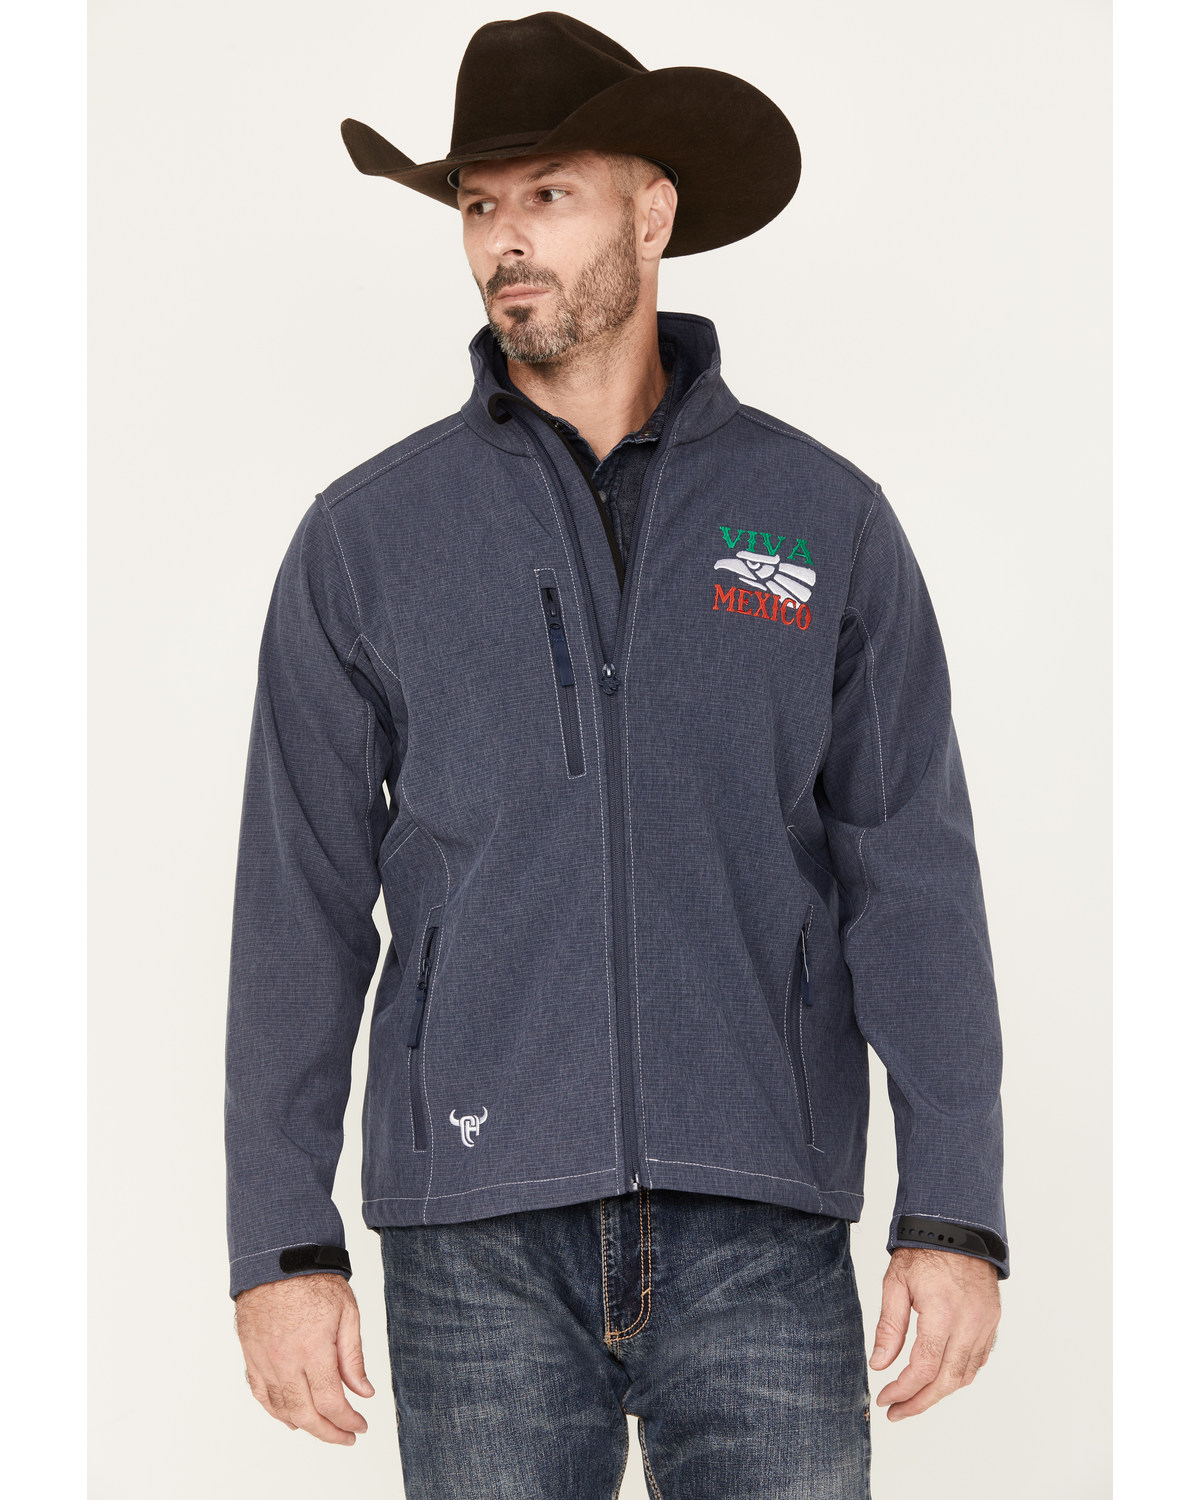 Cowboy Hardware Men's Viva Mexico Softshell Jacket